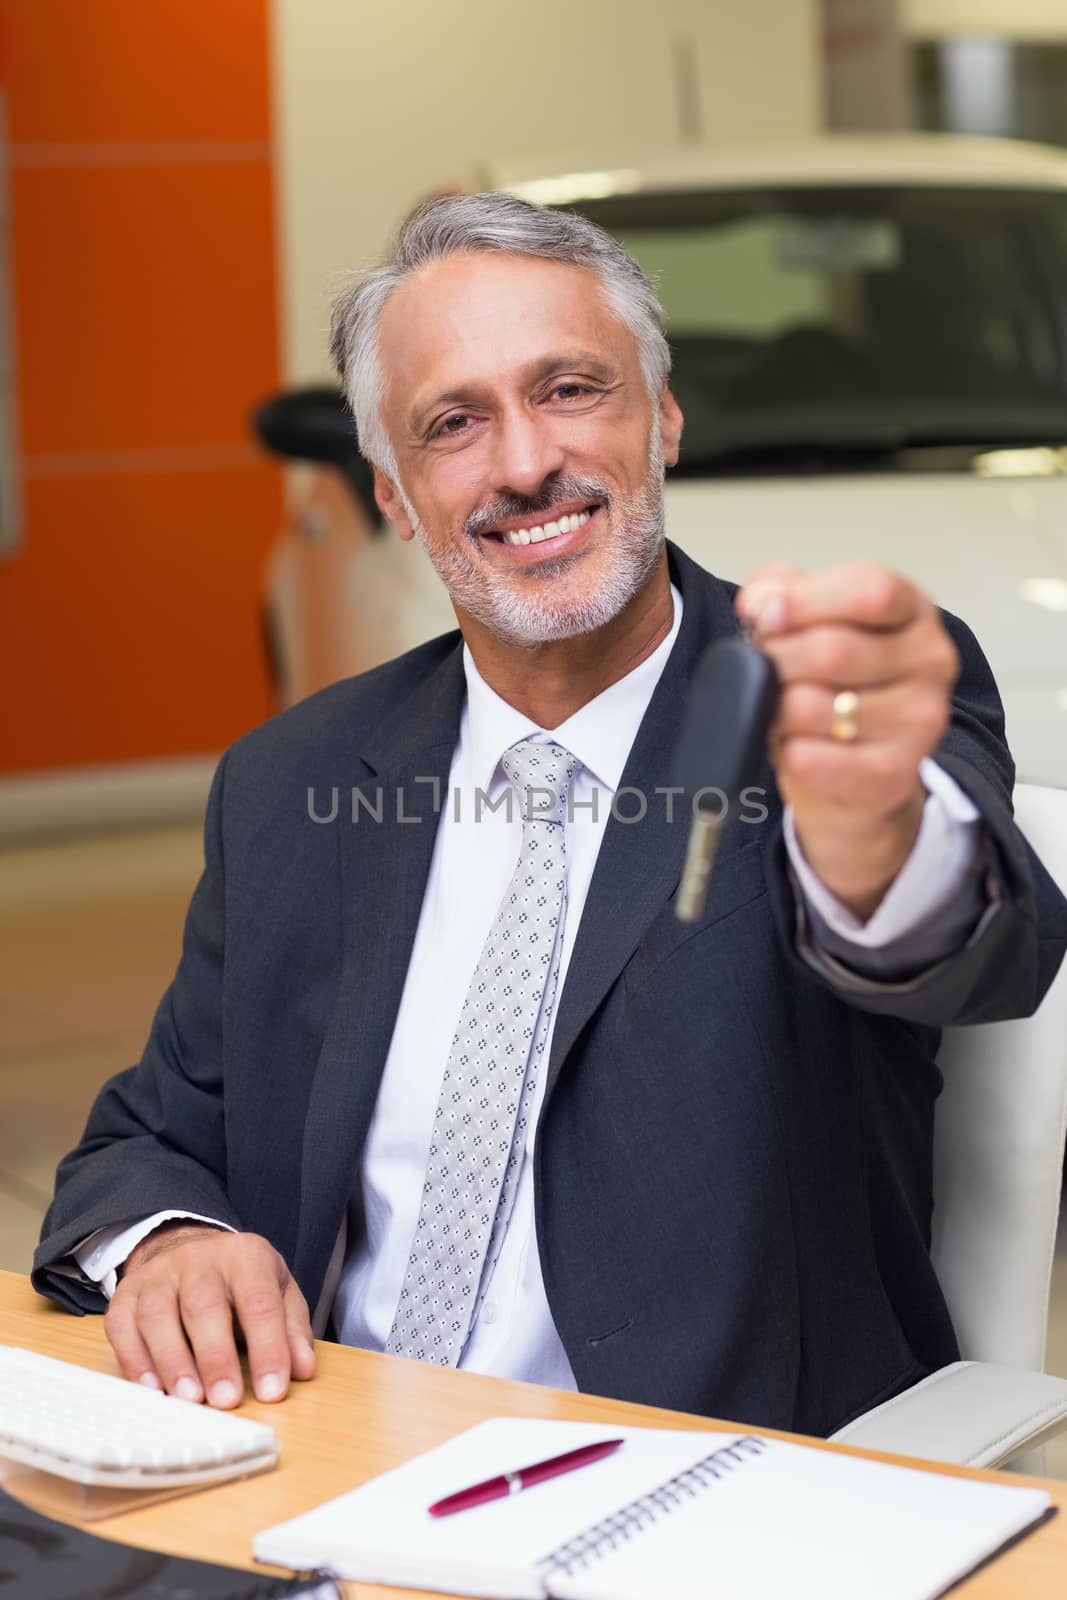 Smiling salesman giving a customer car keys by Wavebreakmedia